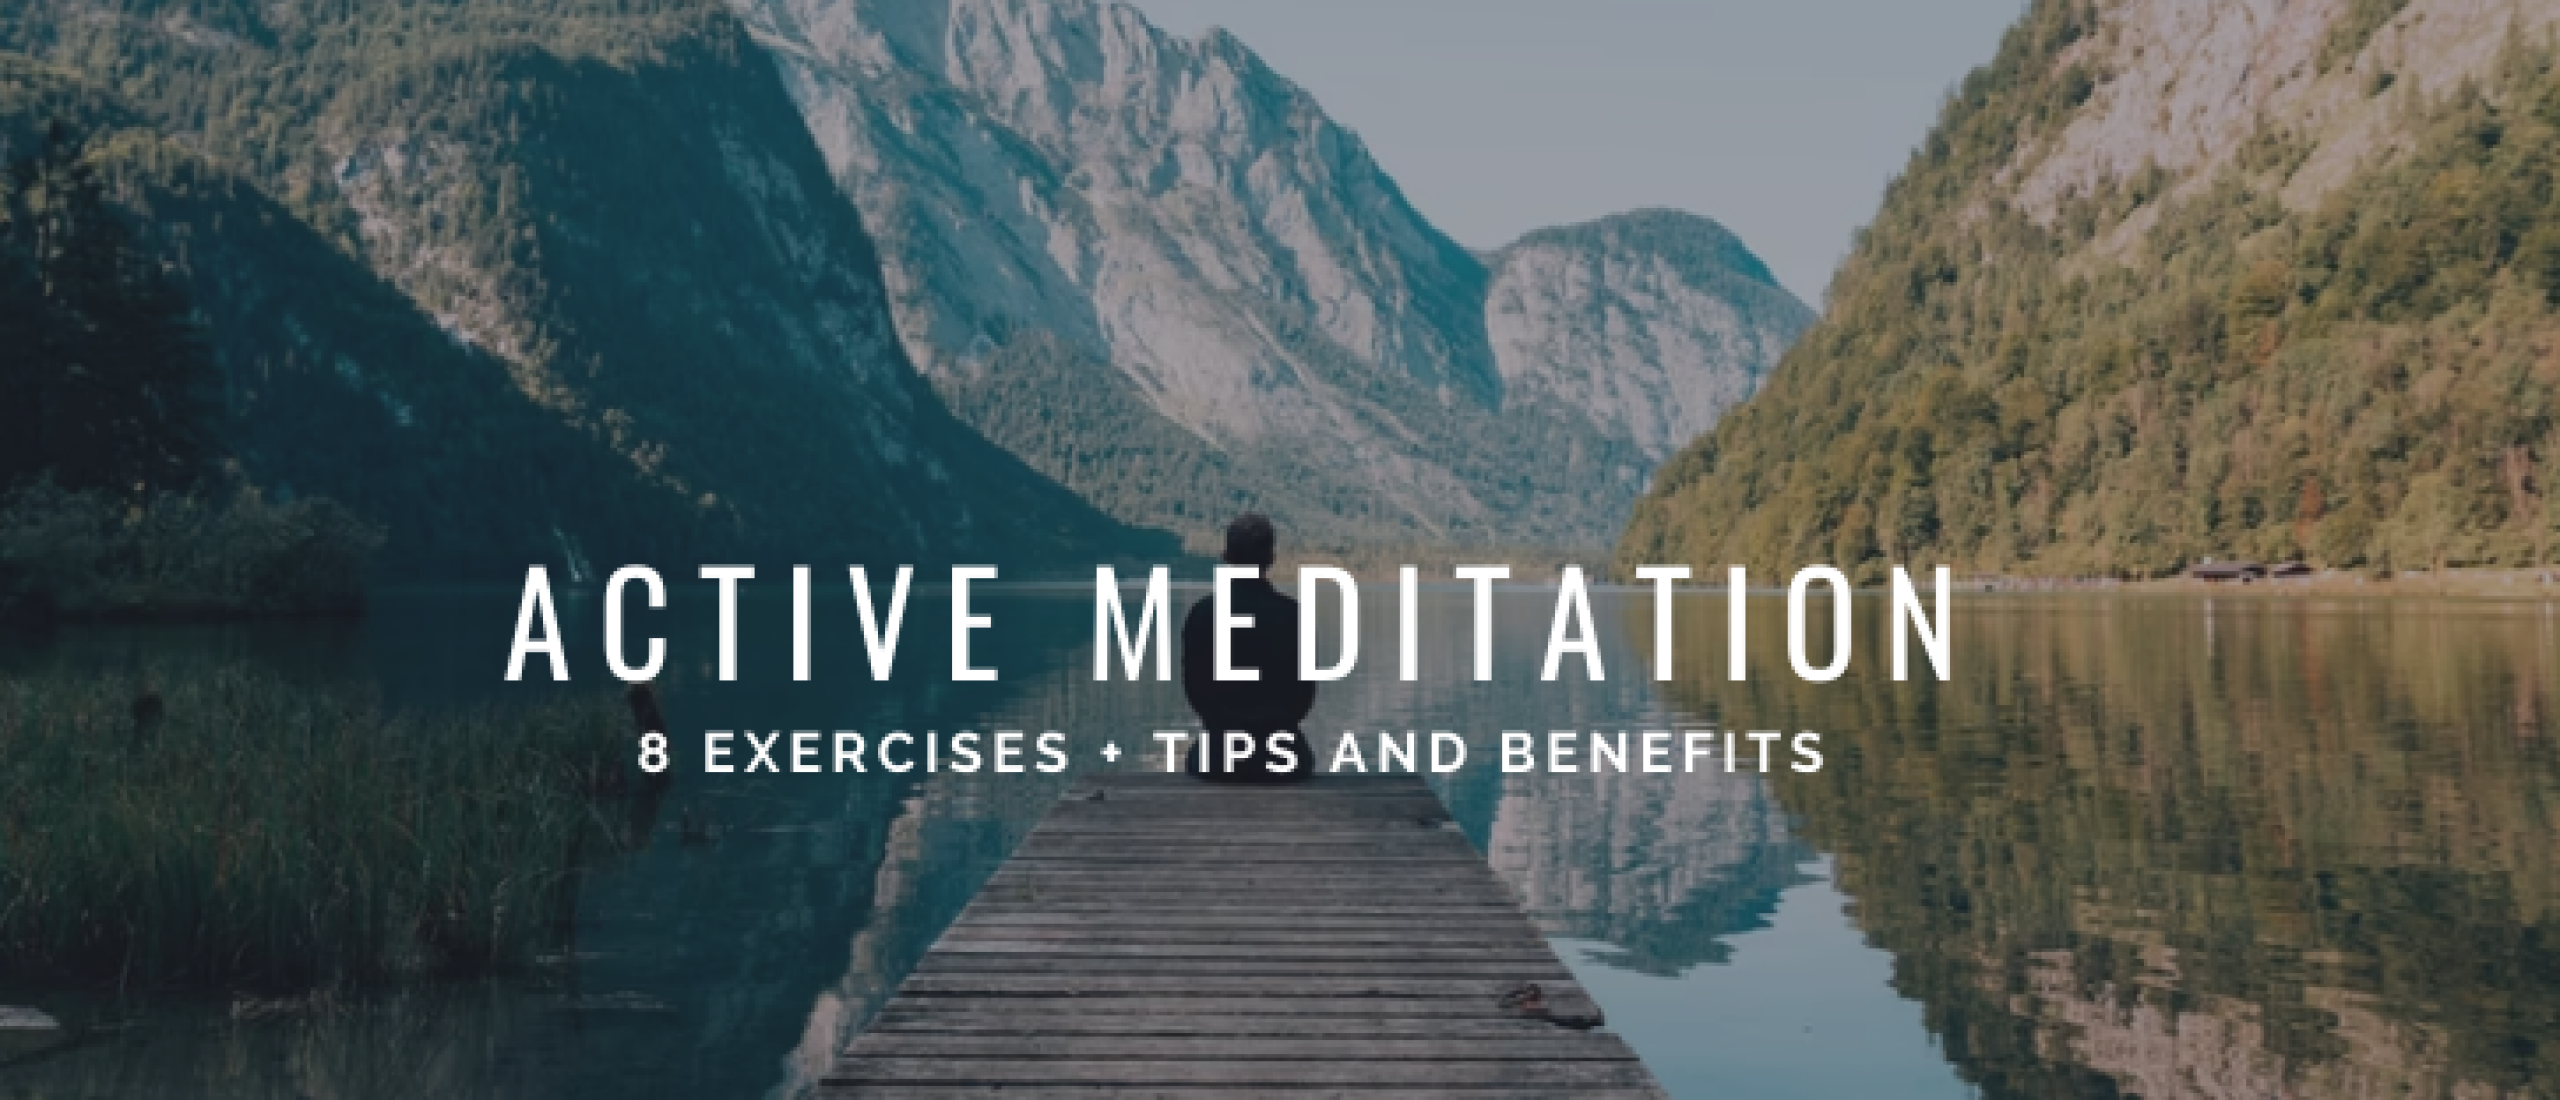 Active Meditation: 7 Benefits, 8 Exercises + Tips